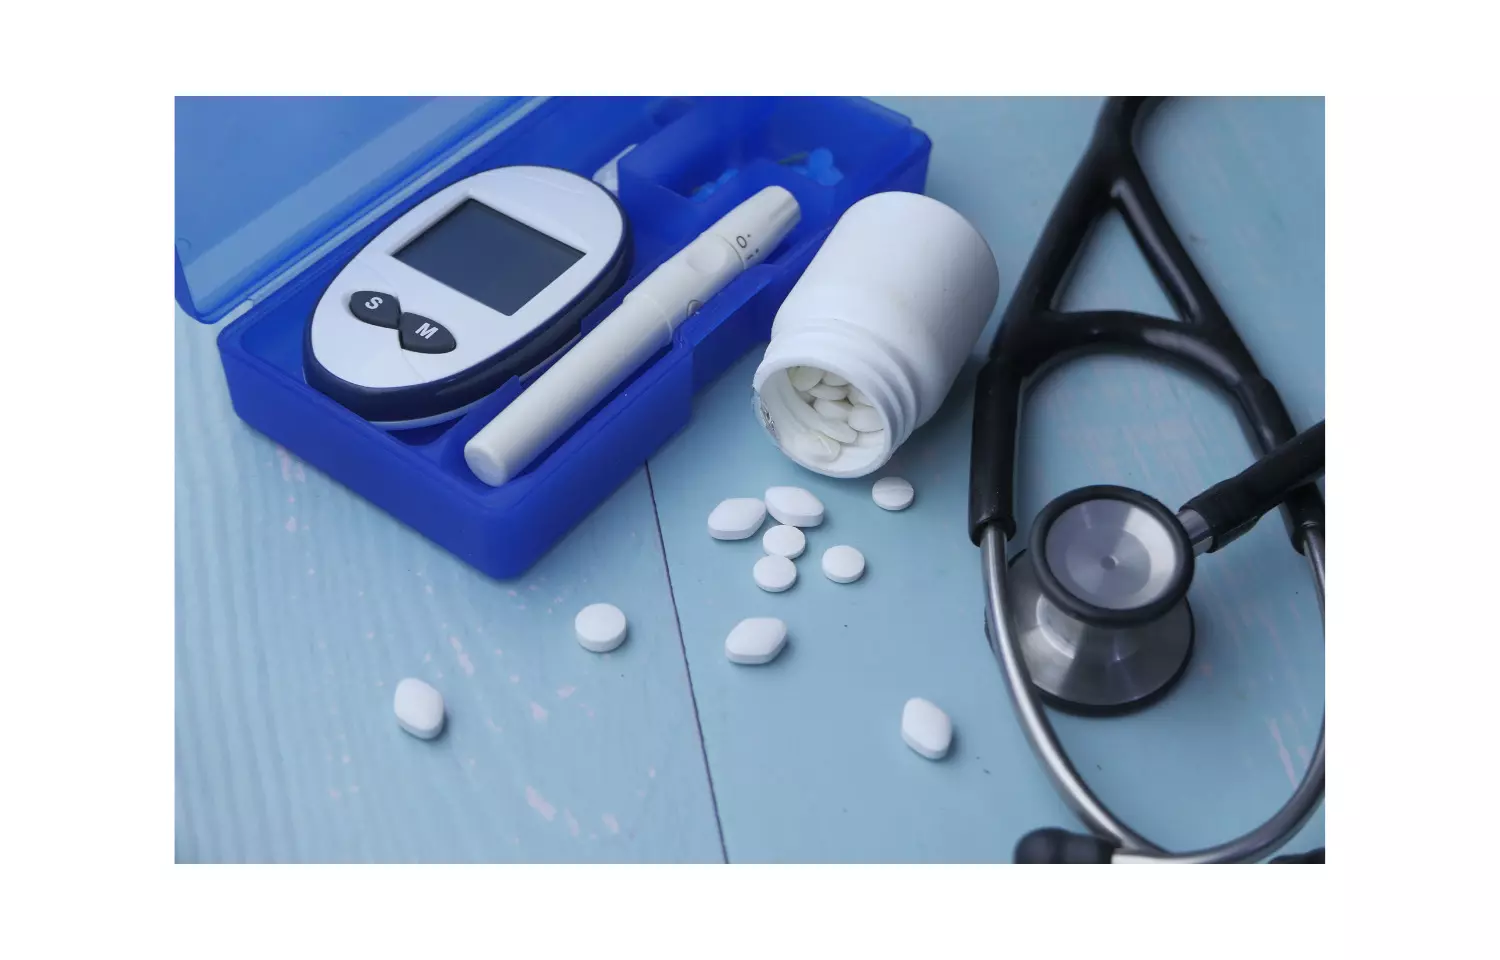 Tirzepatide bests insulin glargine in lowering A1C, body weight and CV risk in diabetics: Lancet